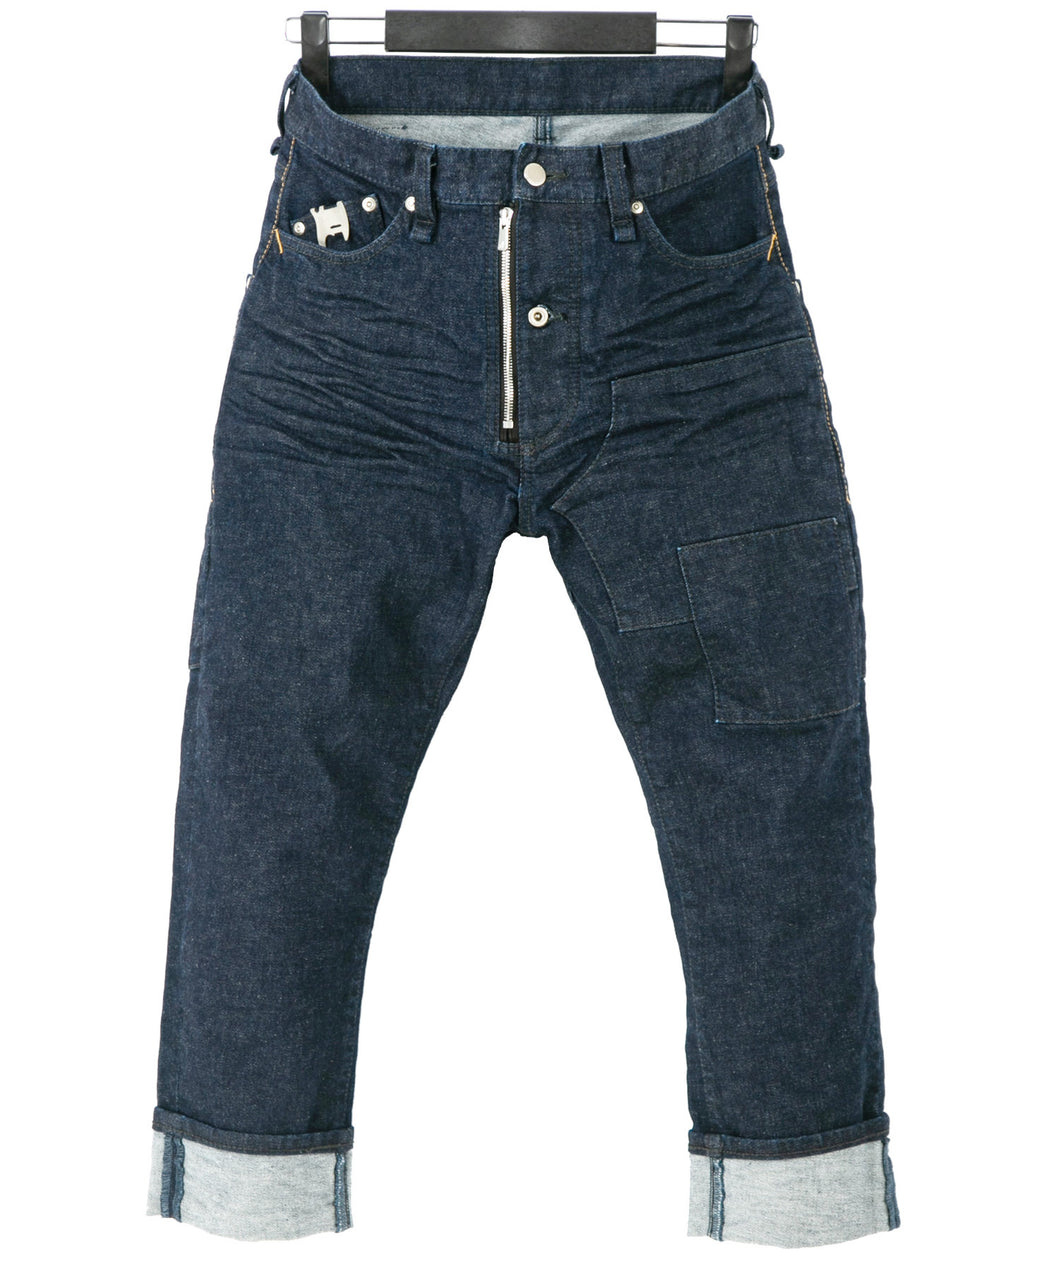 12.5oz Organic Cotton Stretch Denim Cropped Jeans One Wash / INDIGO